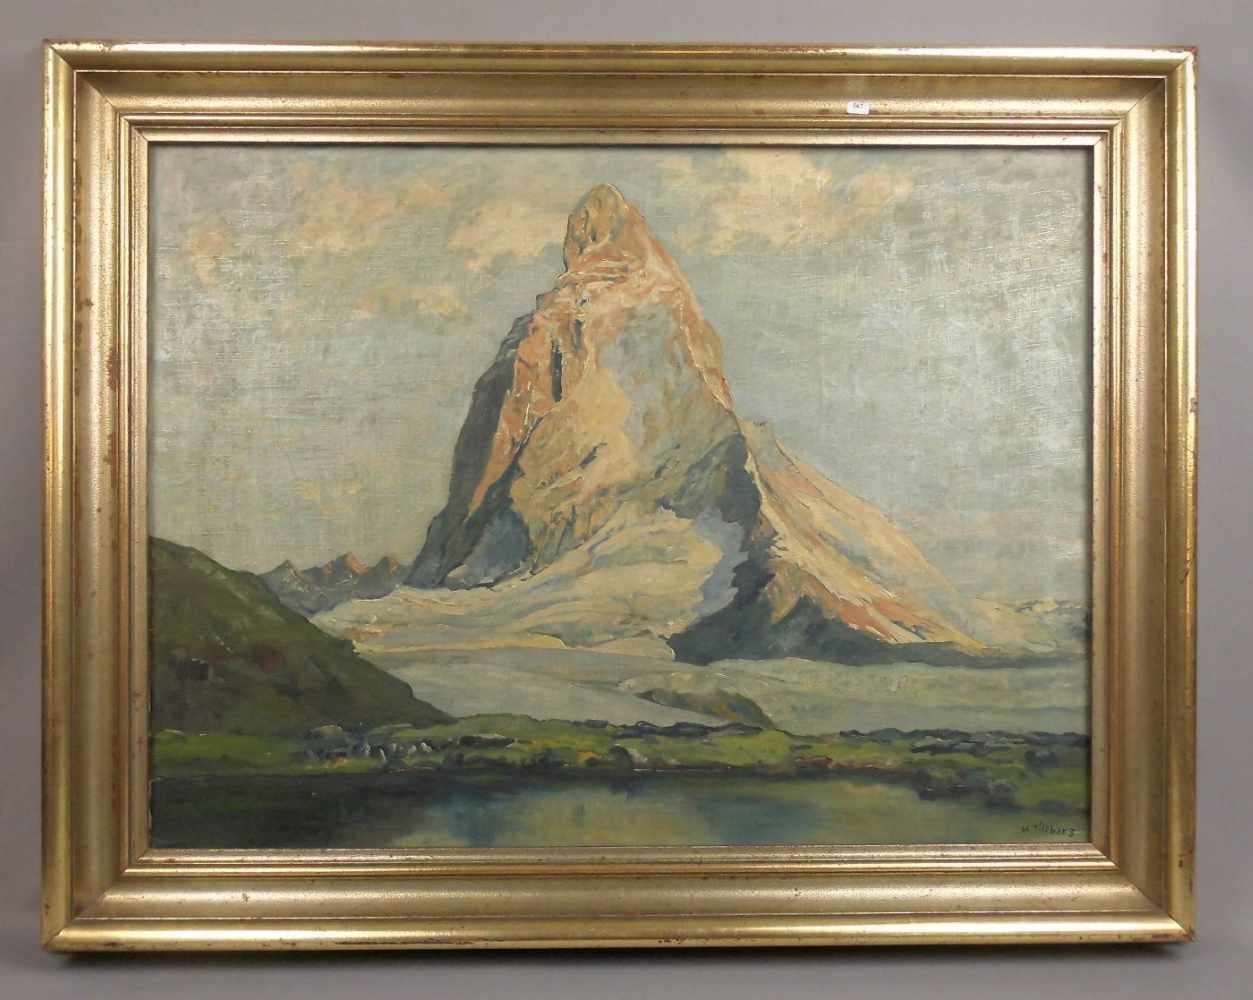 TILLBERG, HARALD (MEISSEN 1877-1955 MÜNCHEN), Gemälde: "Matterhorn", 1. H. 20. Jh., Öl auf Leinwand,